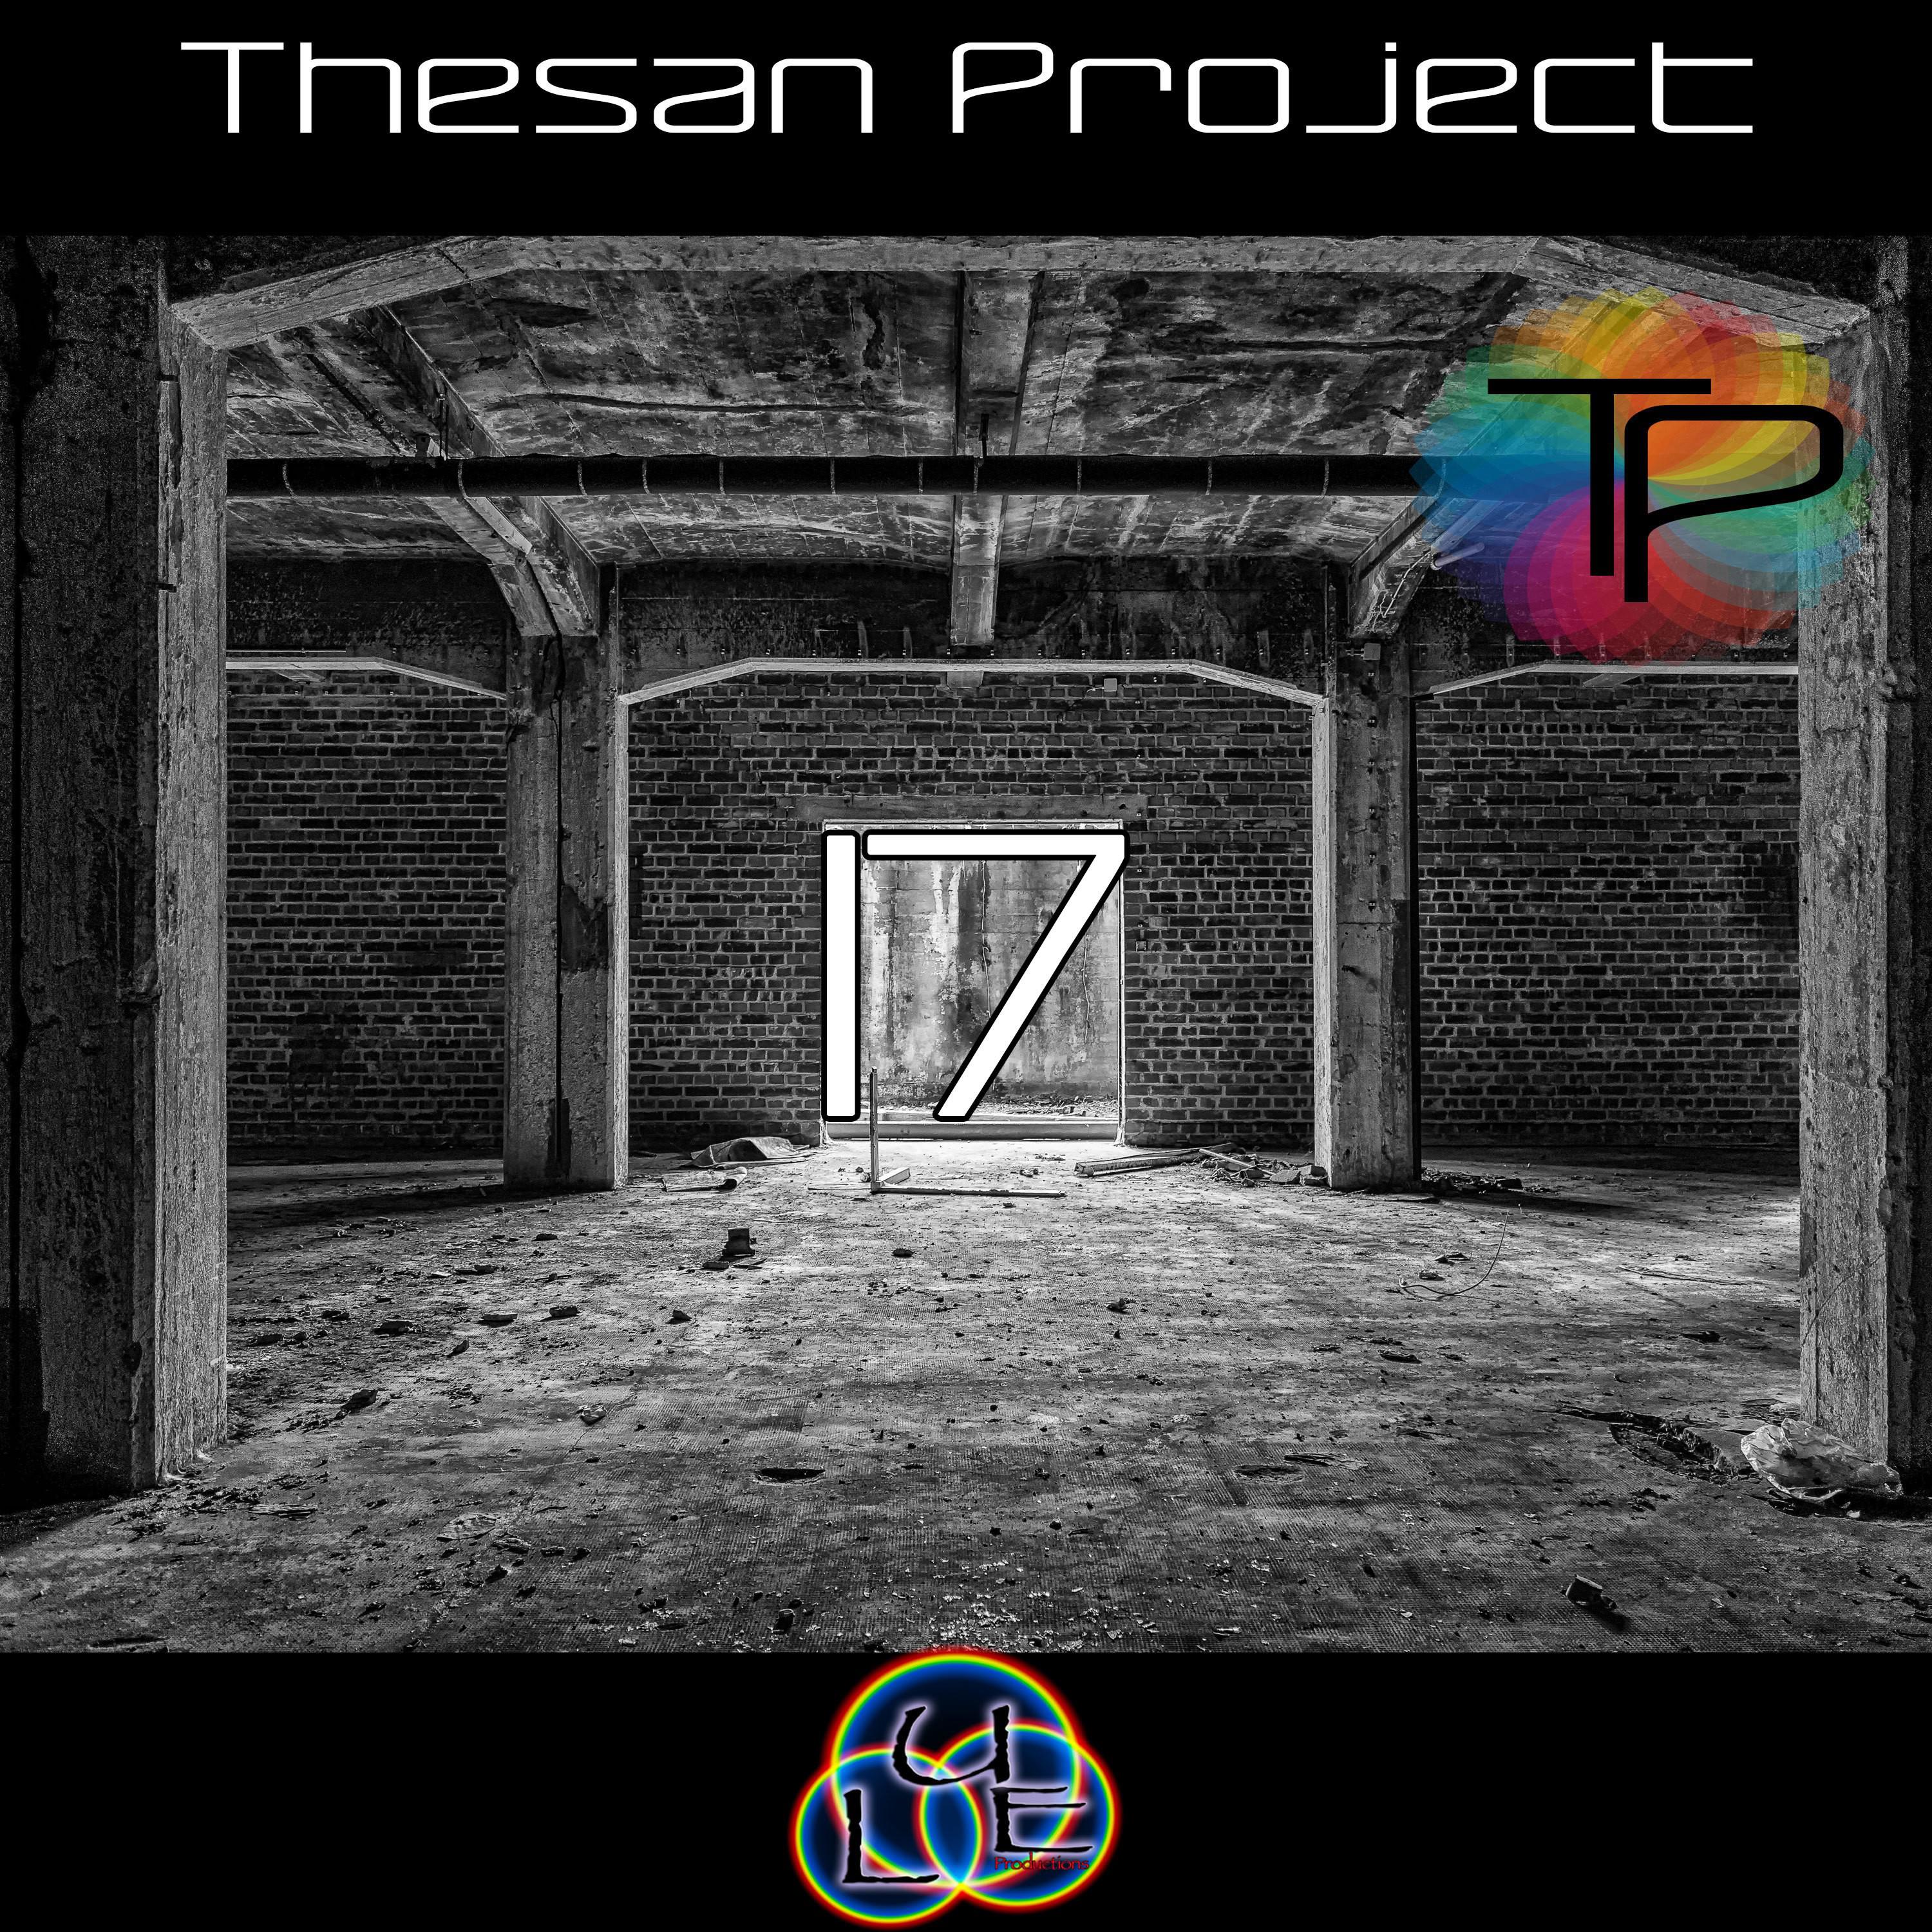 Thesan Project - Ipanema 17 (Edit)